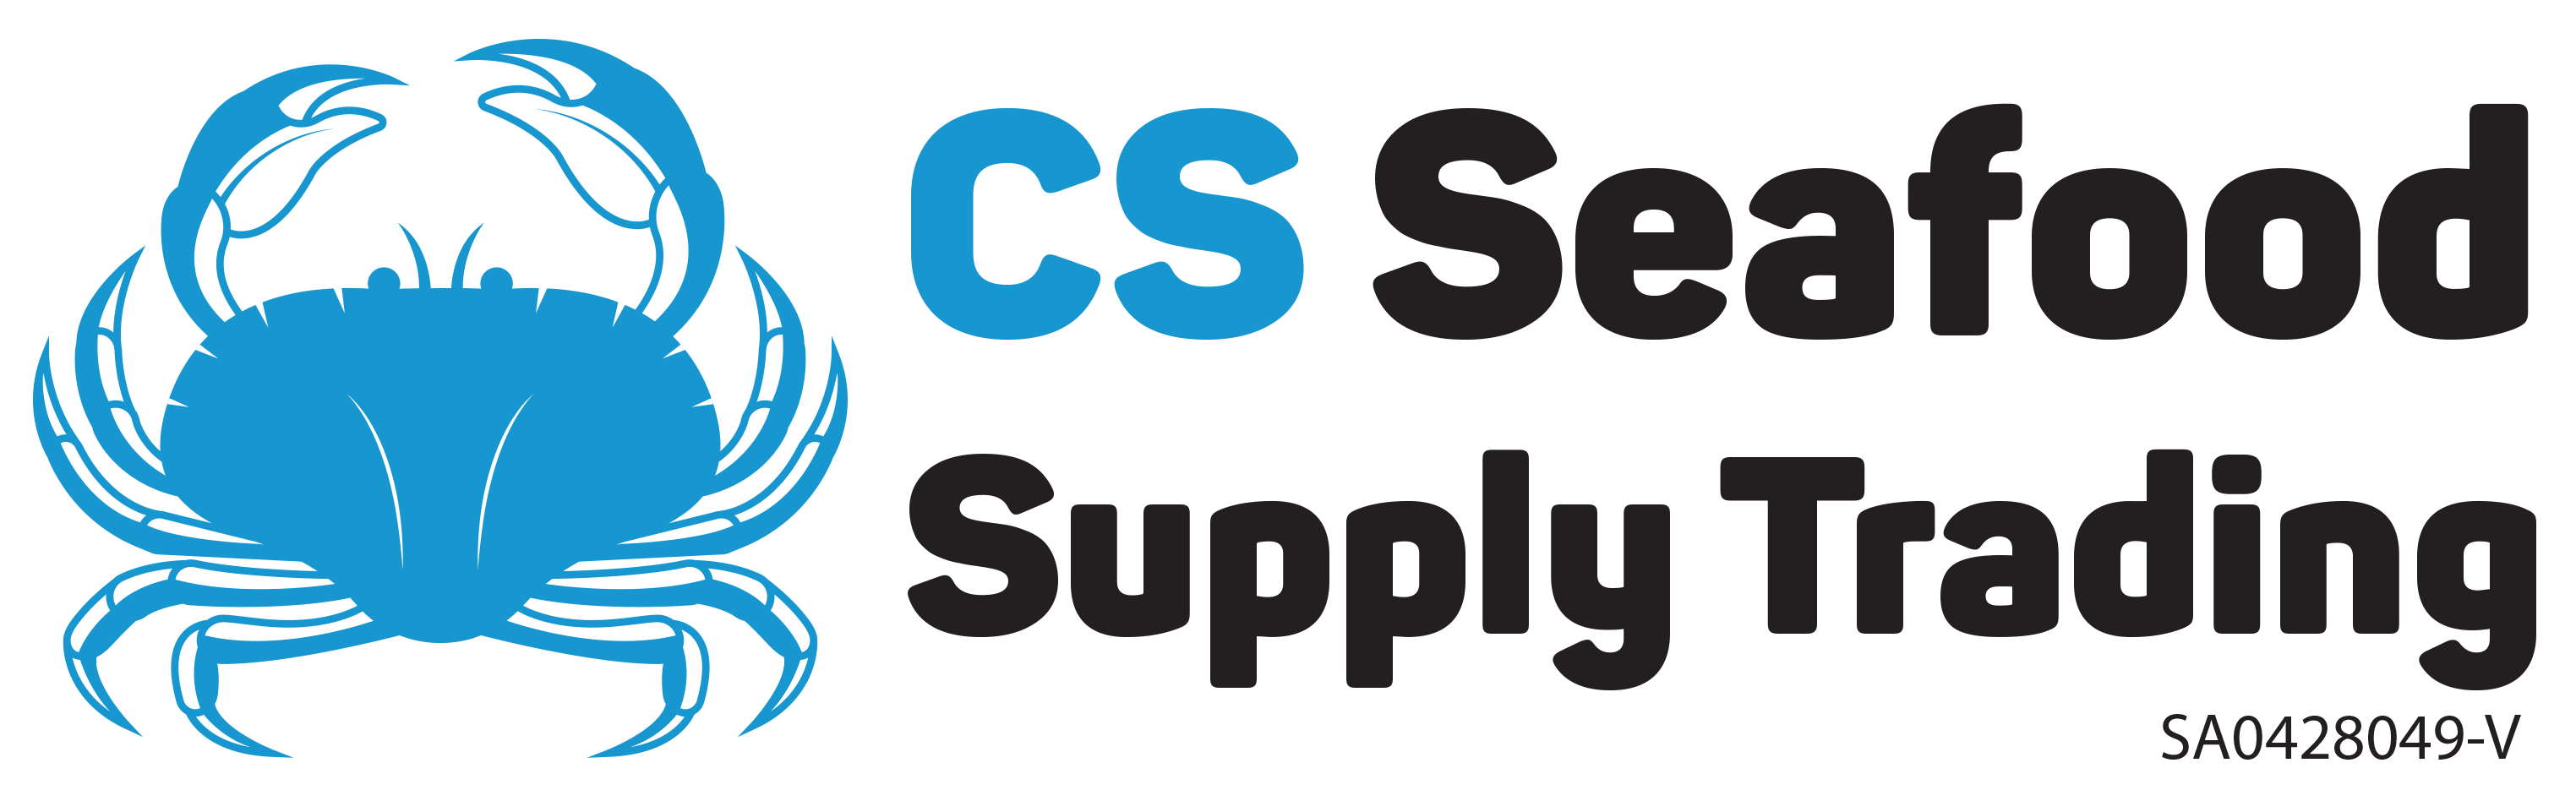 CS Seafood Supply Trading Malaysia